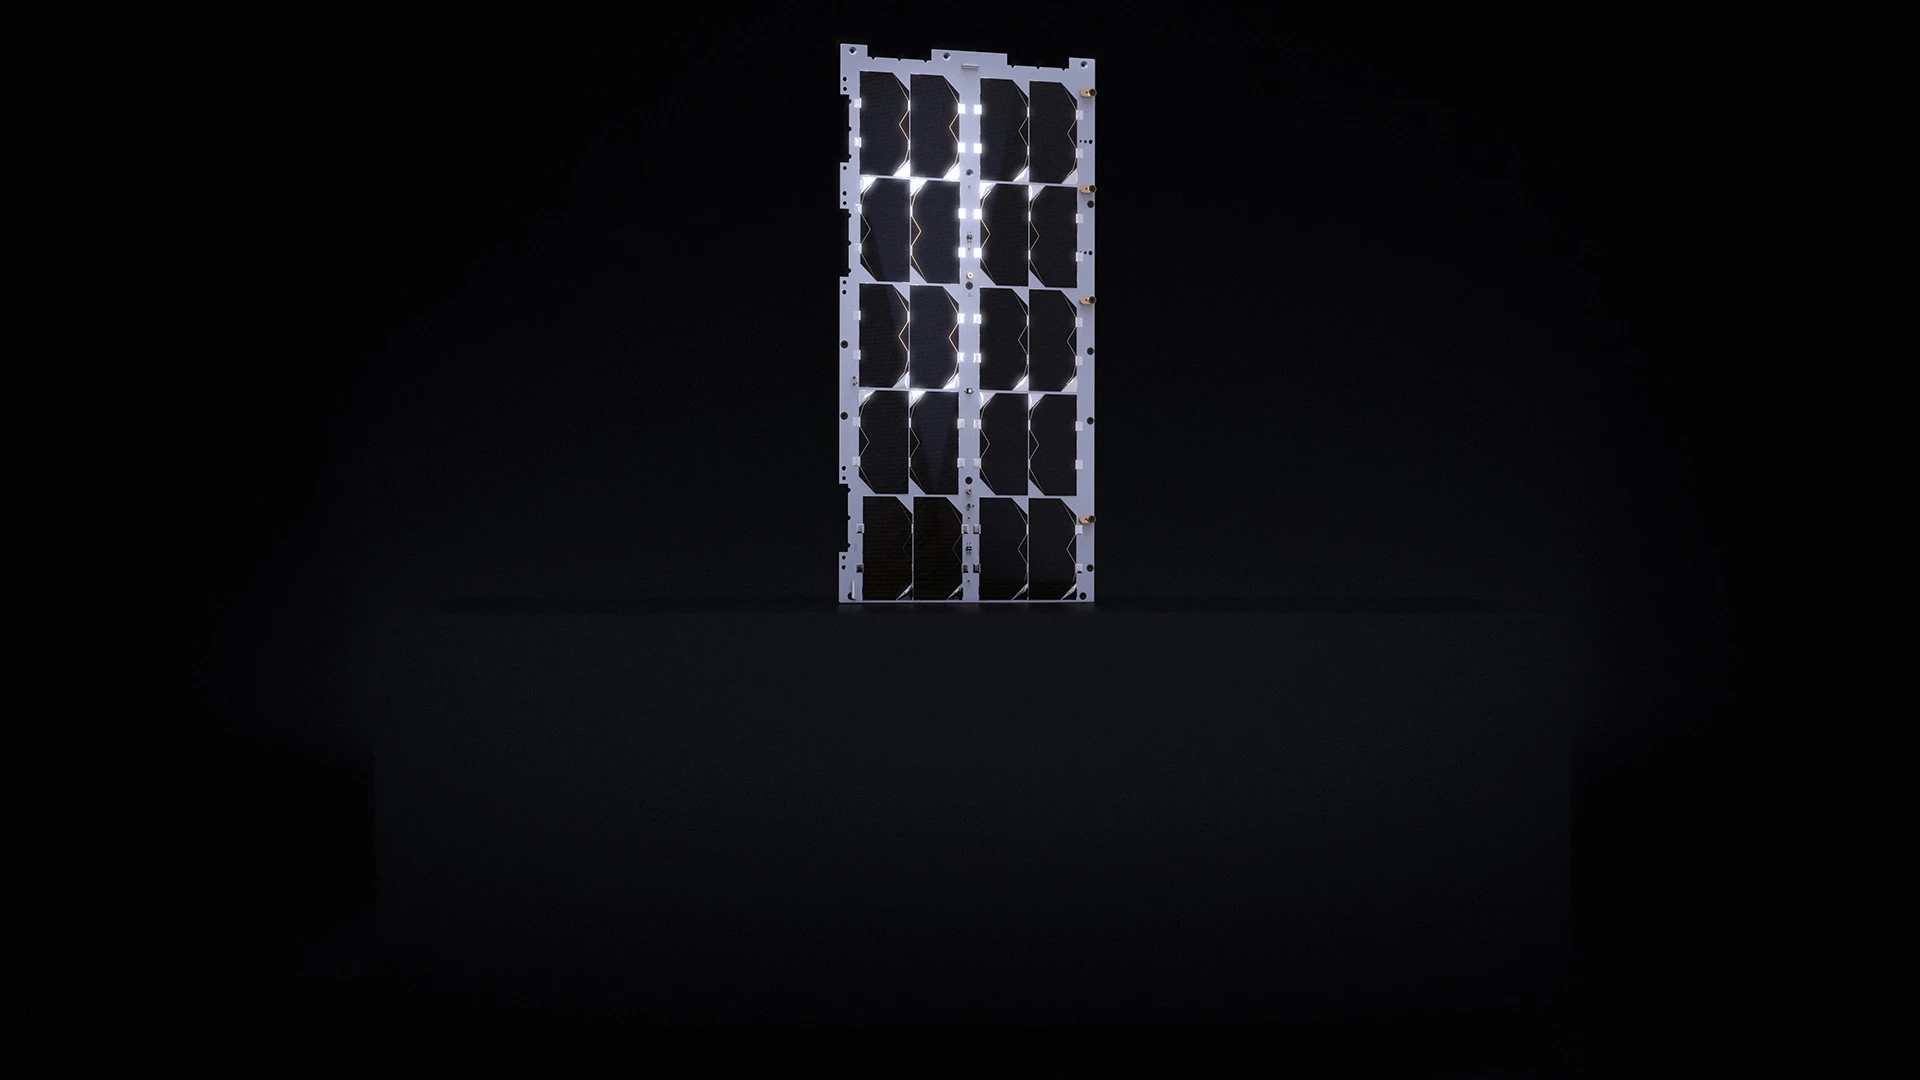 8U Solar Panel web render 5